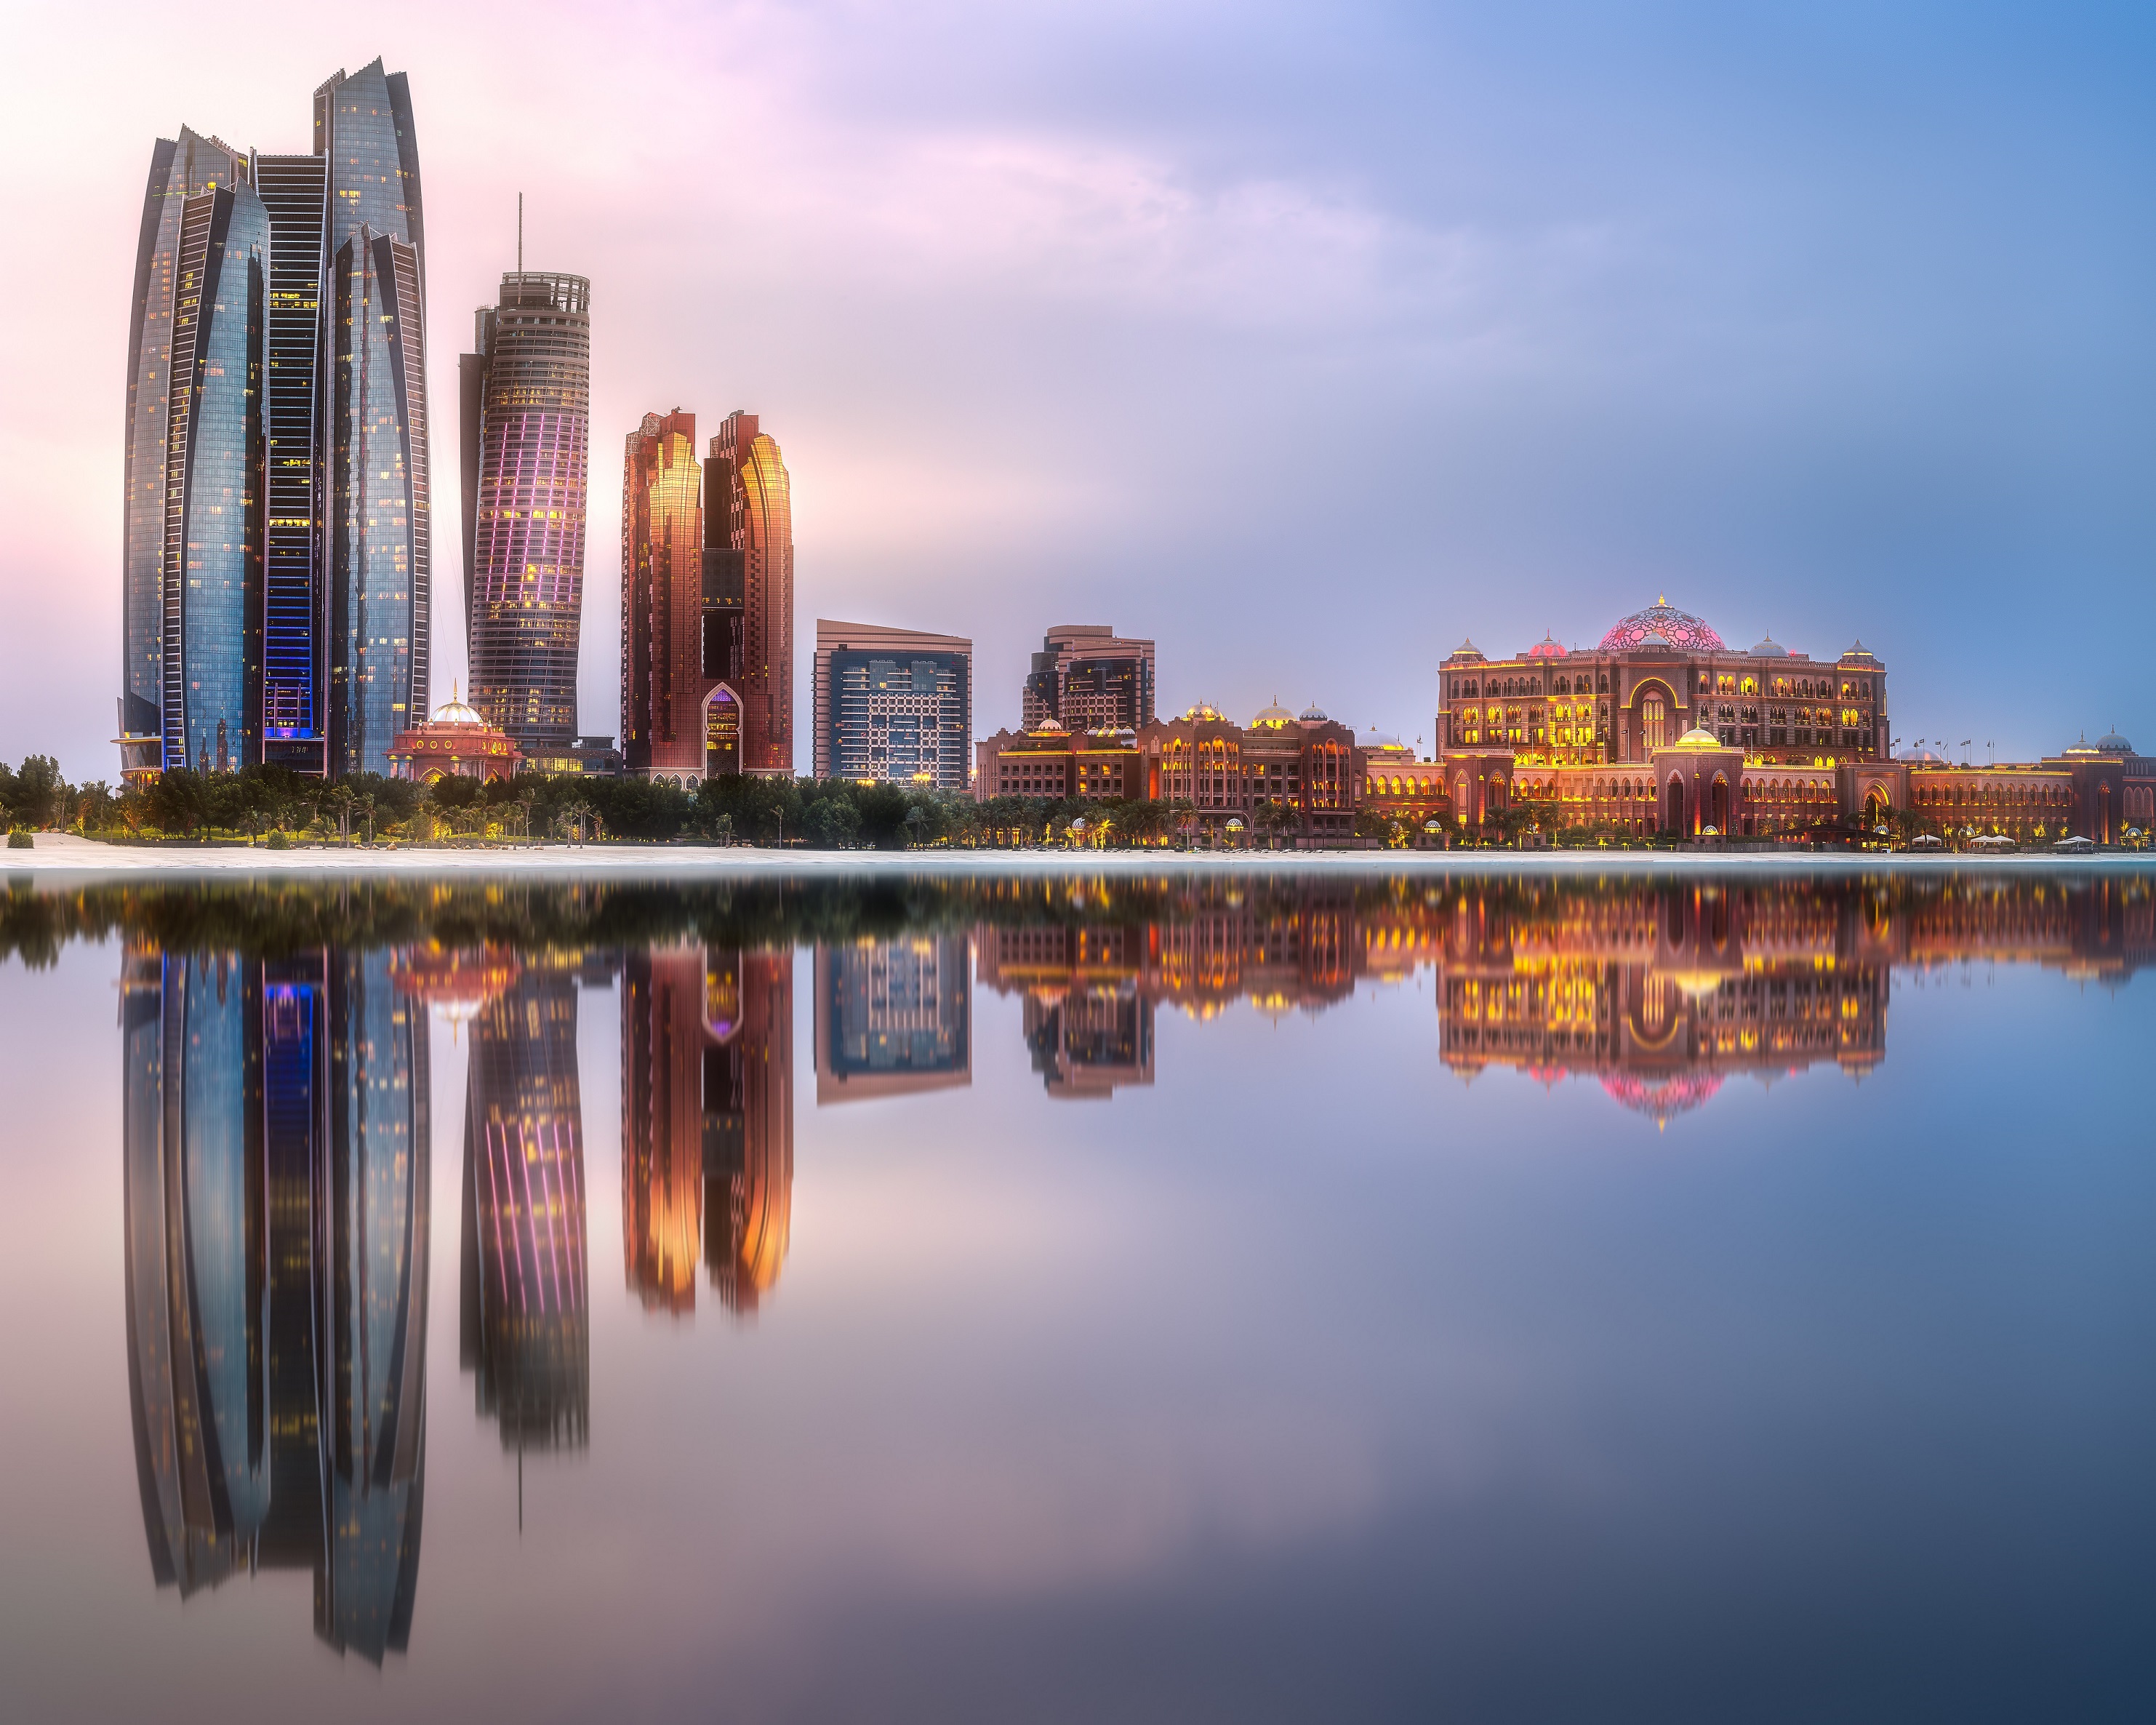 Culture Summit Abu Dhabi Announces New Theme